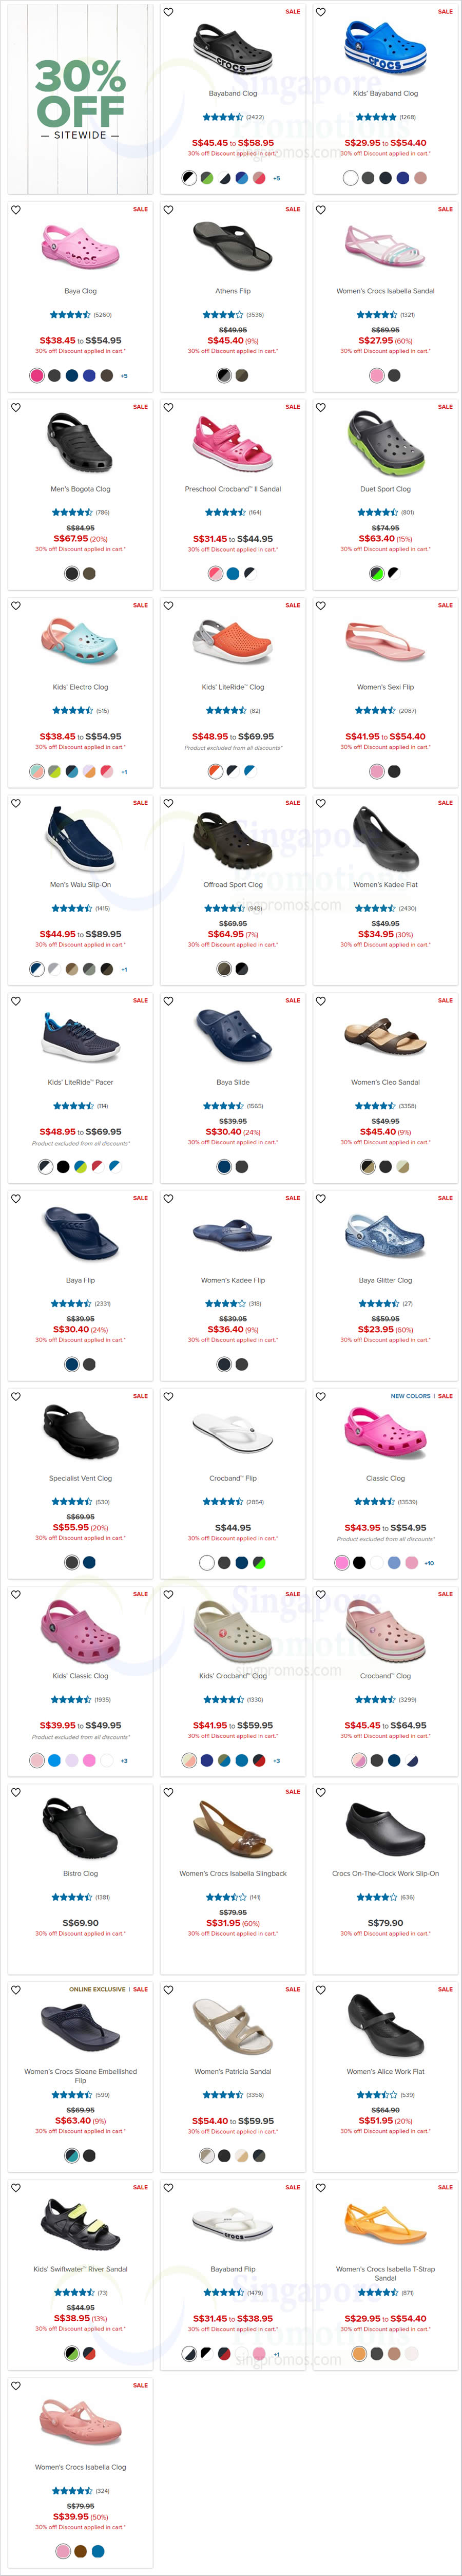 Crocs: 30% OFF sitewide online sale 